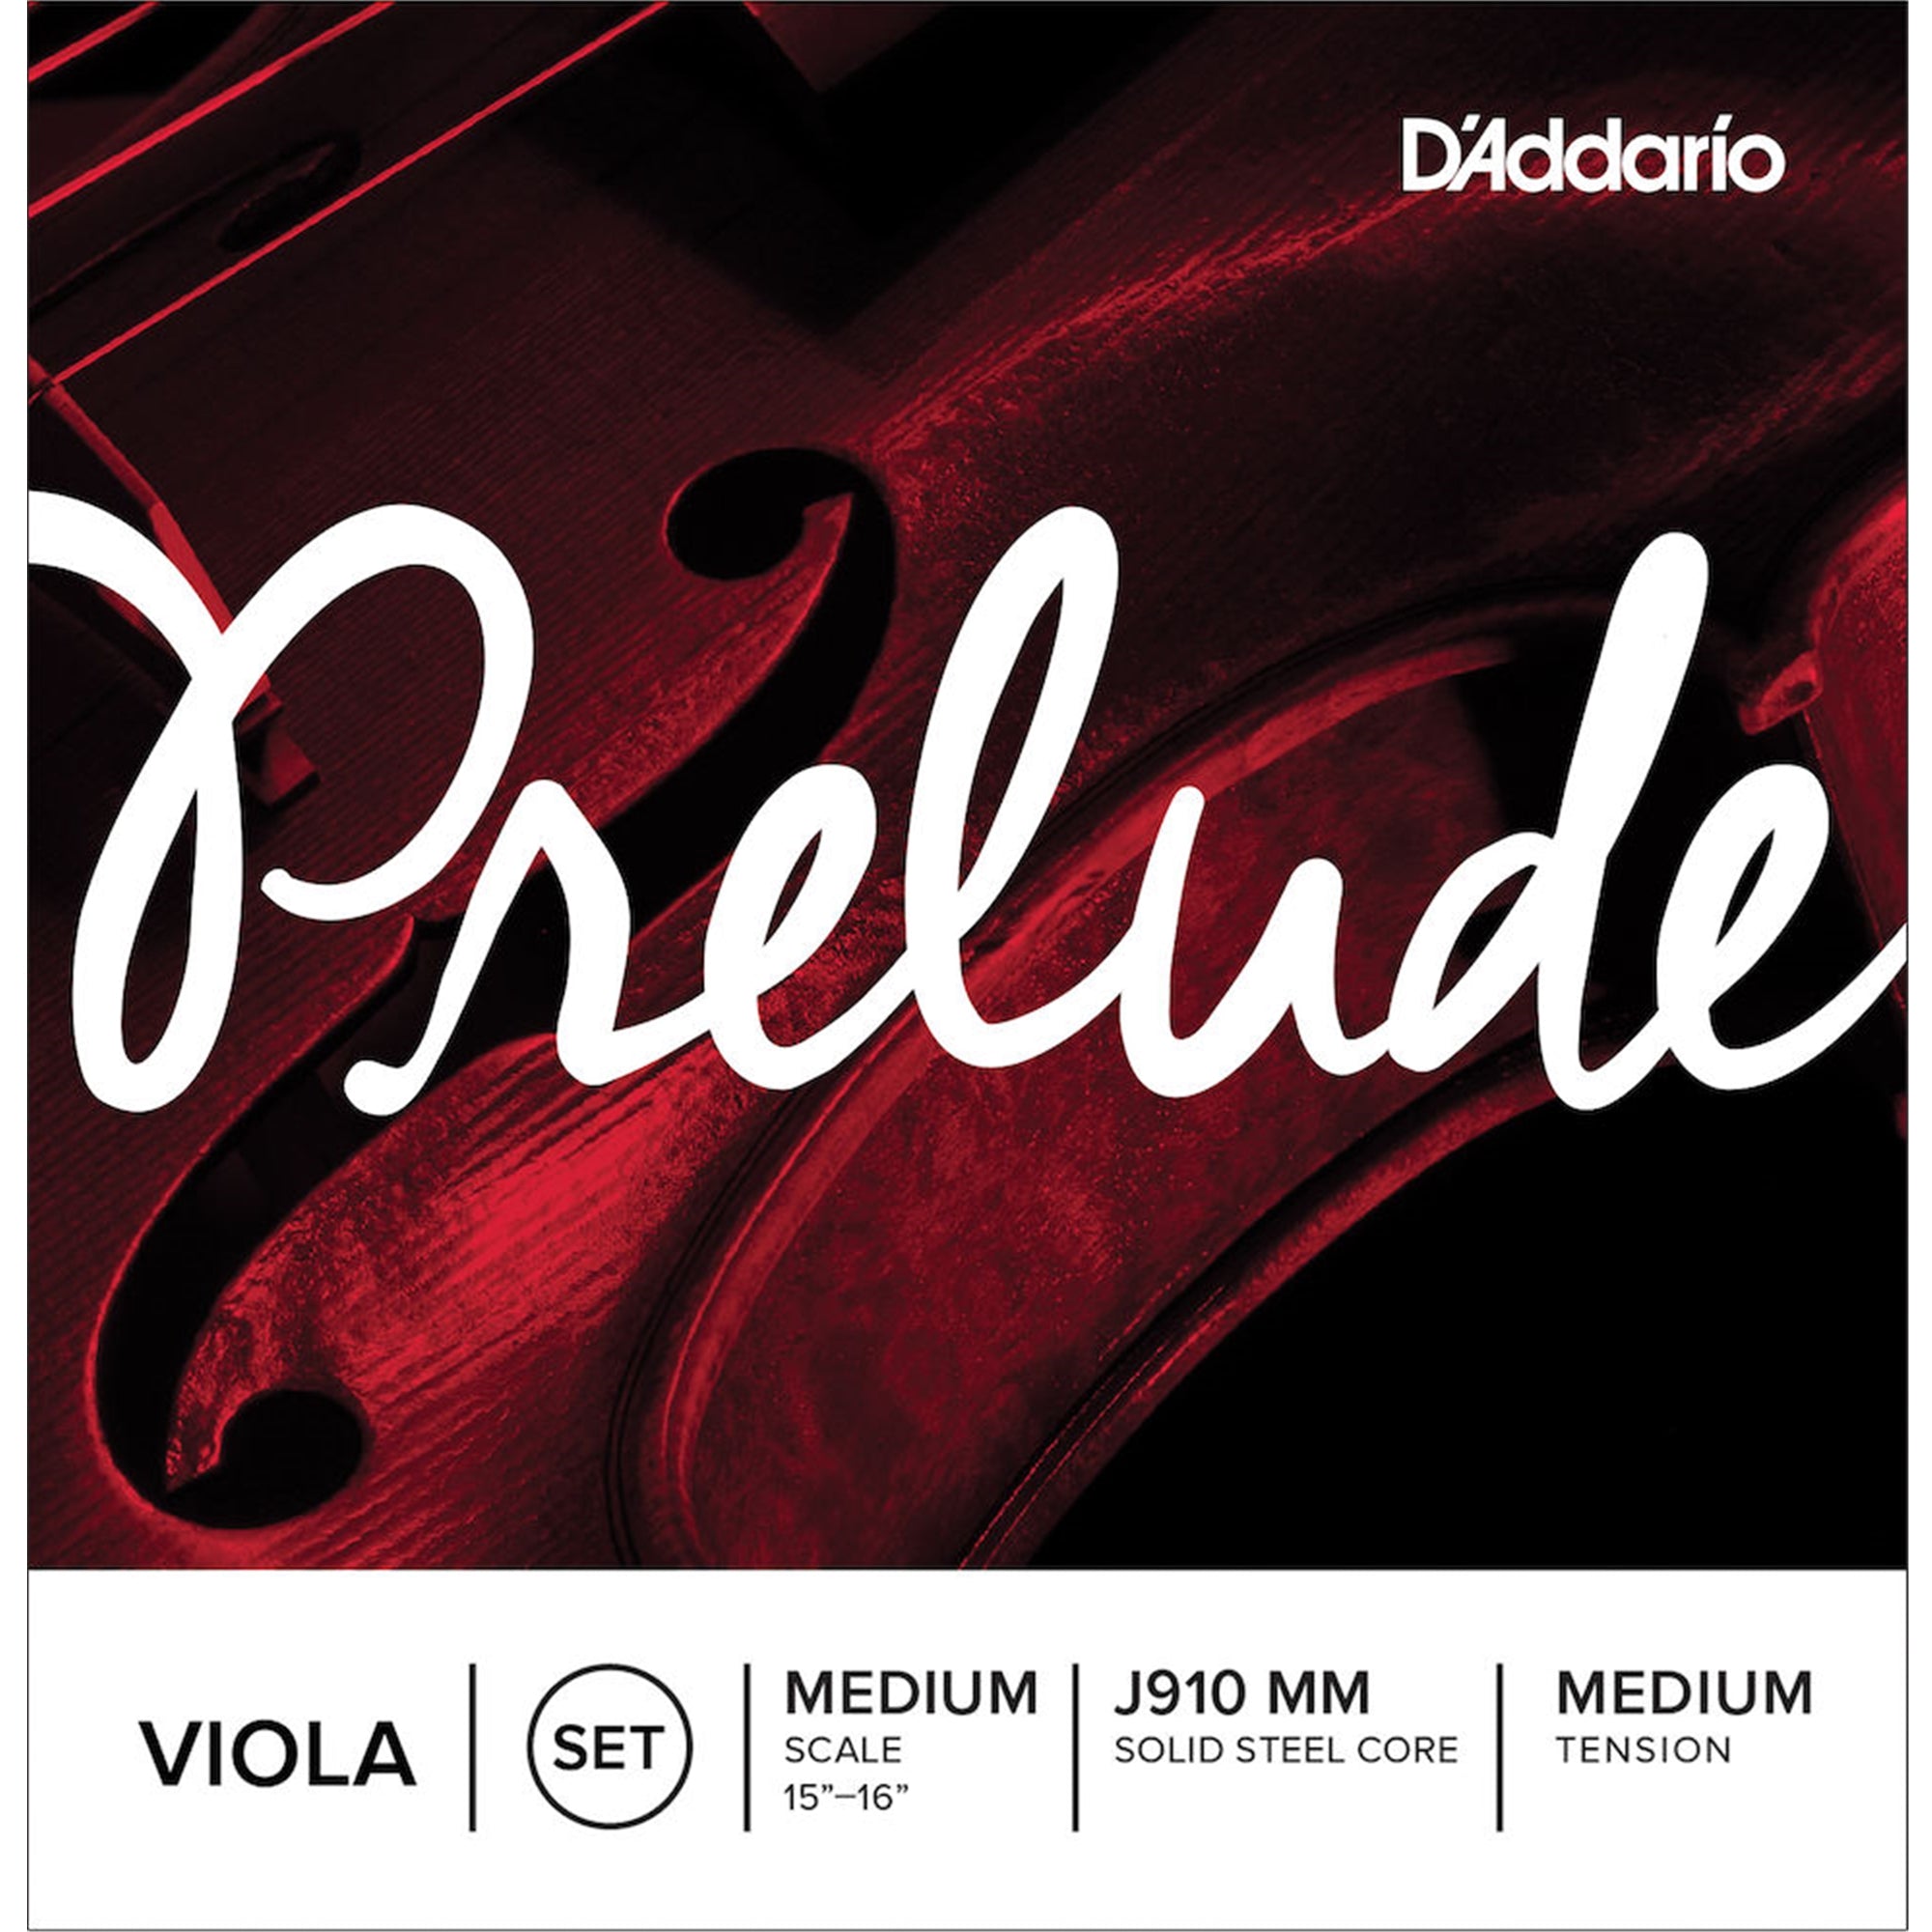 D'Addario Prelude String Set, Medium Scale, Medium Tension Viola